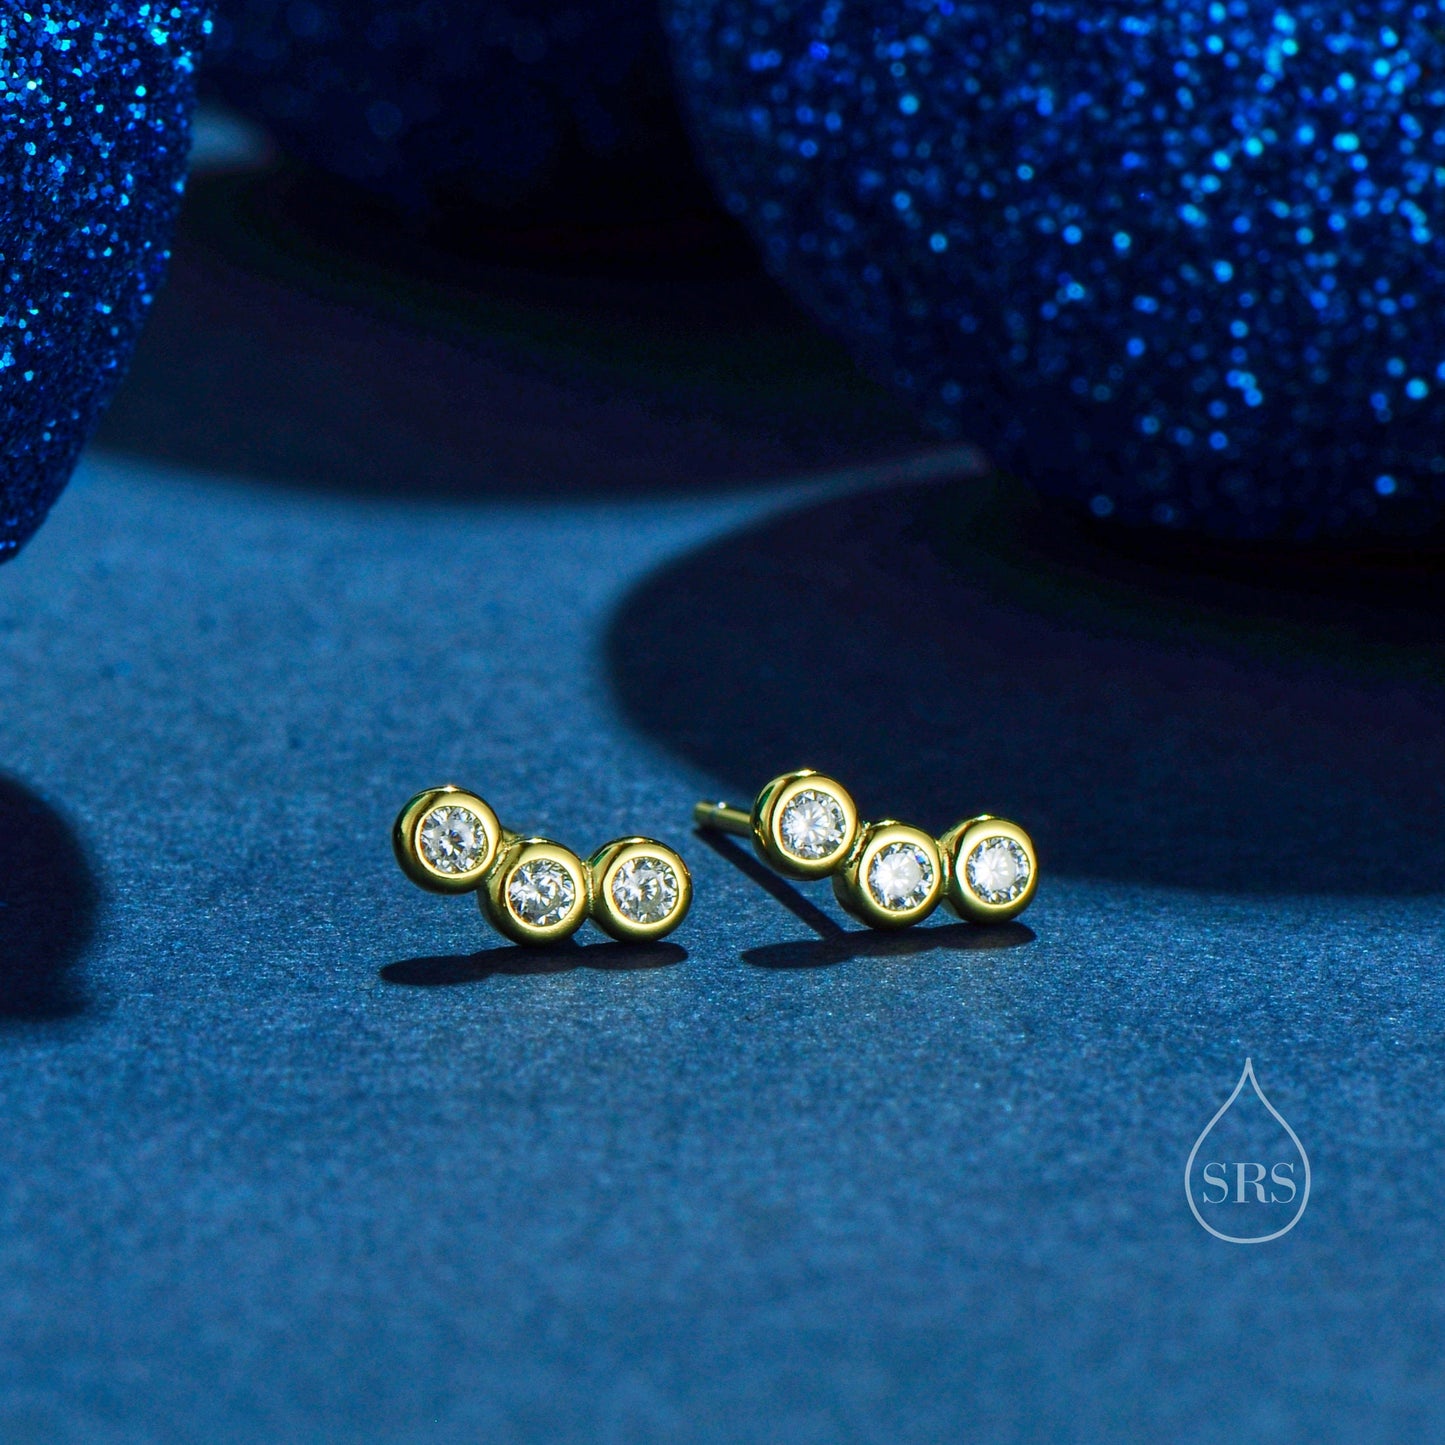 Tiny CZ Trio Stud Earrings in Sterling Silver, Silver, Gold or Rose Gold, Small CZ Earrings, Three CZ Earrings, Pebble Earrings